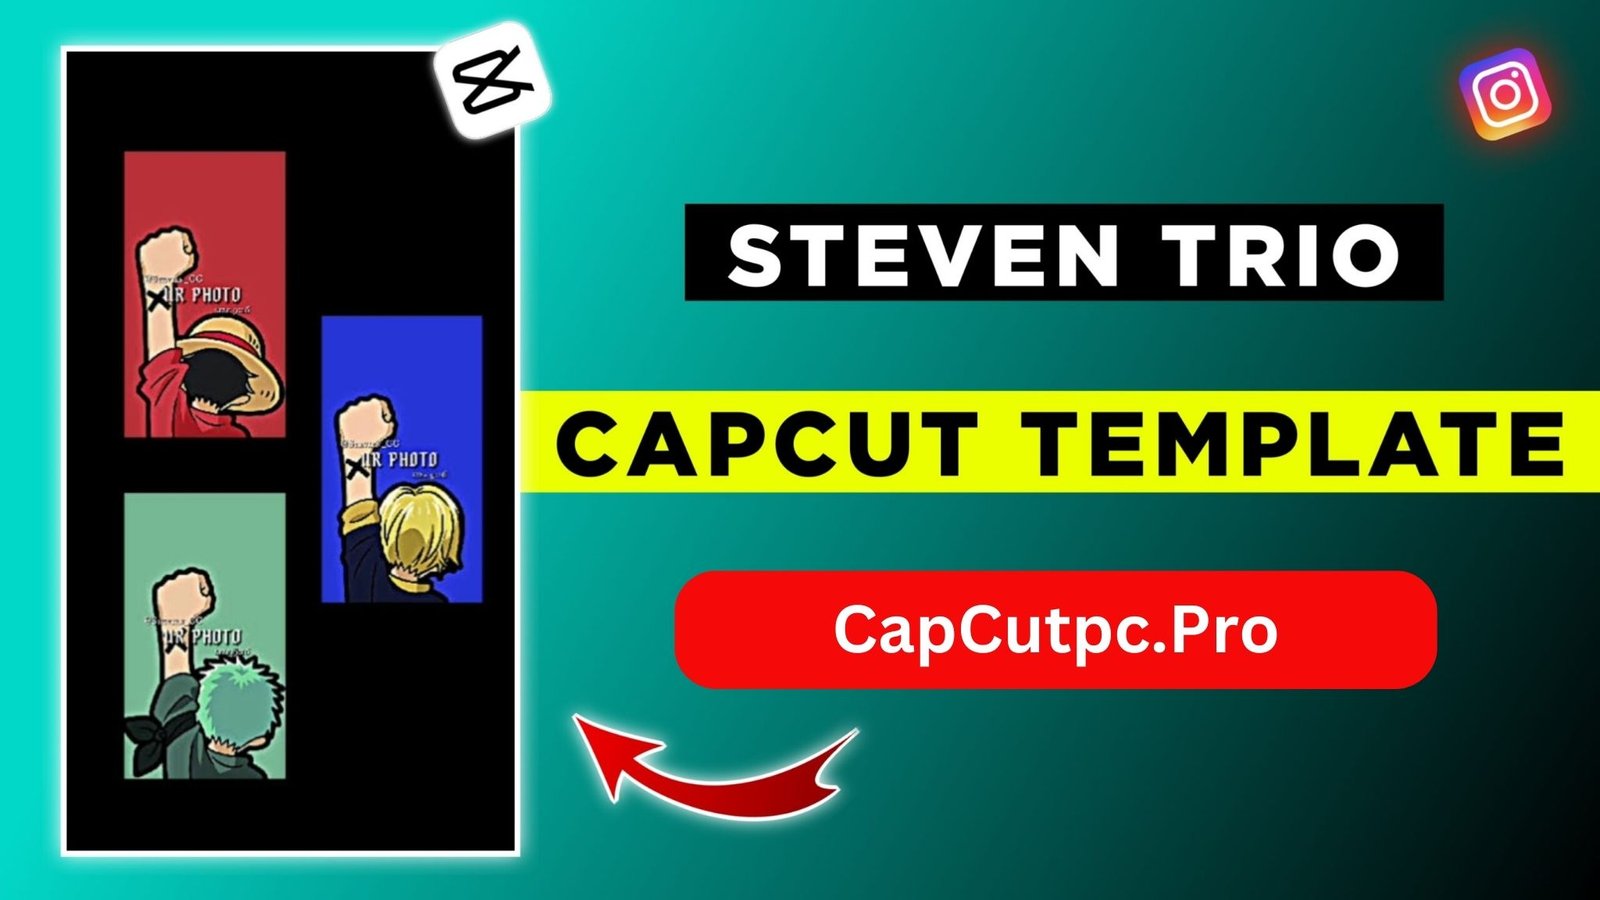 Steven Trio CapCut Template: A Guide to Editing Stunning Videos